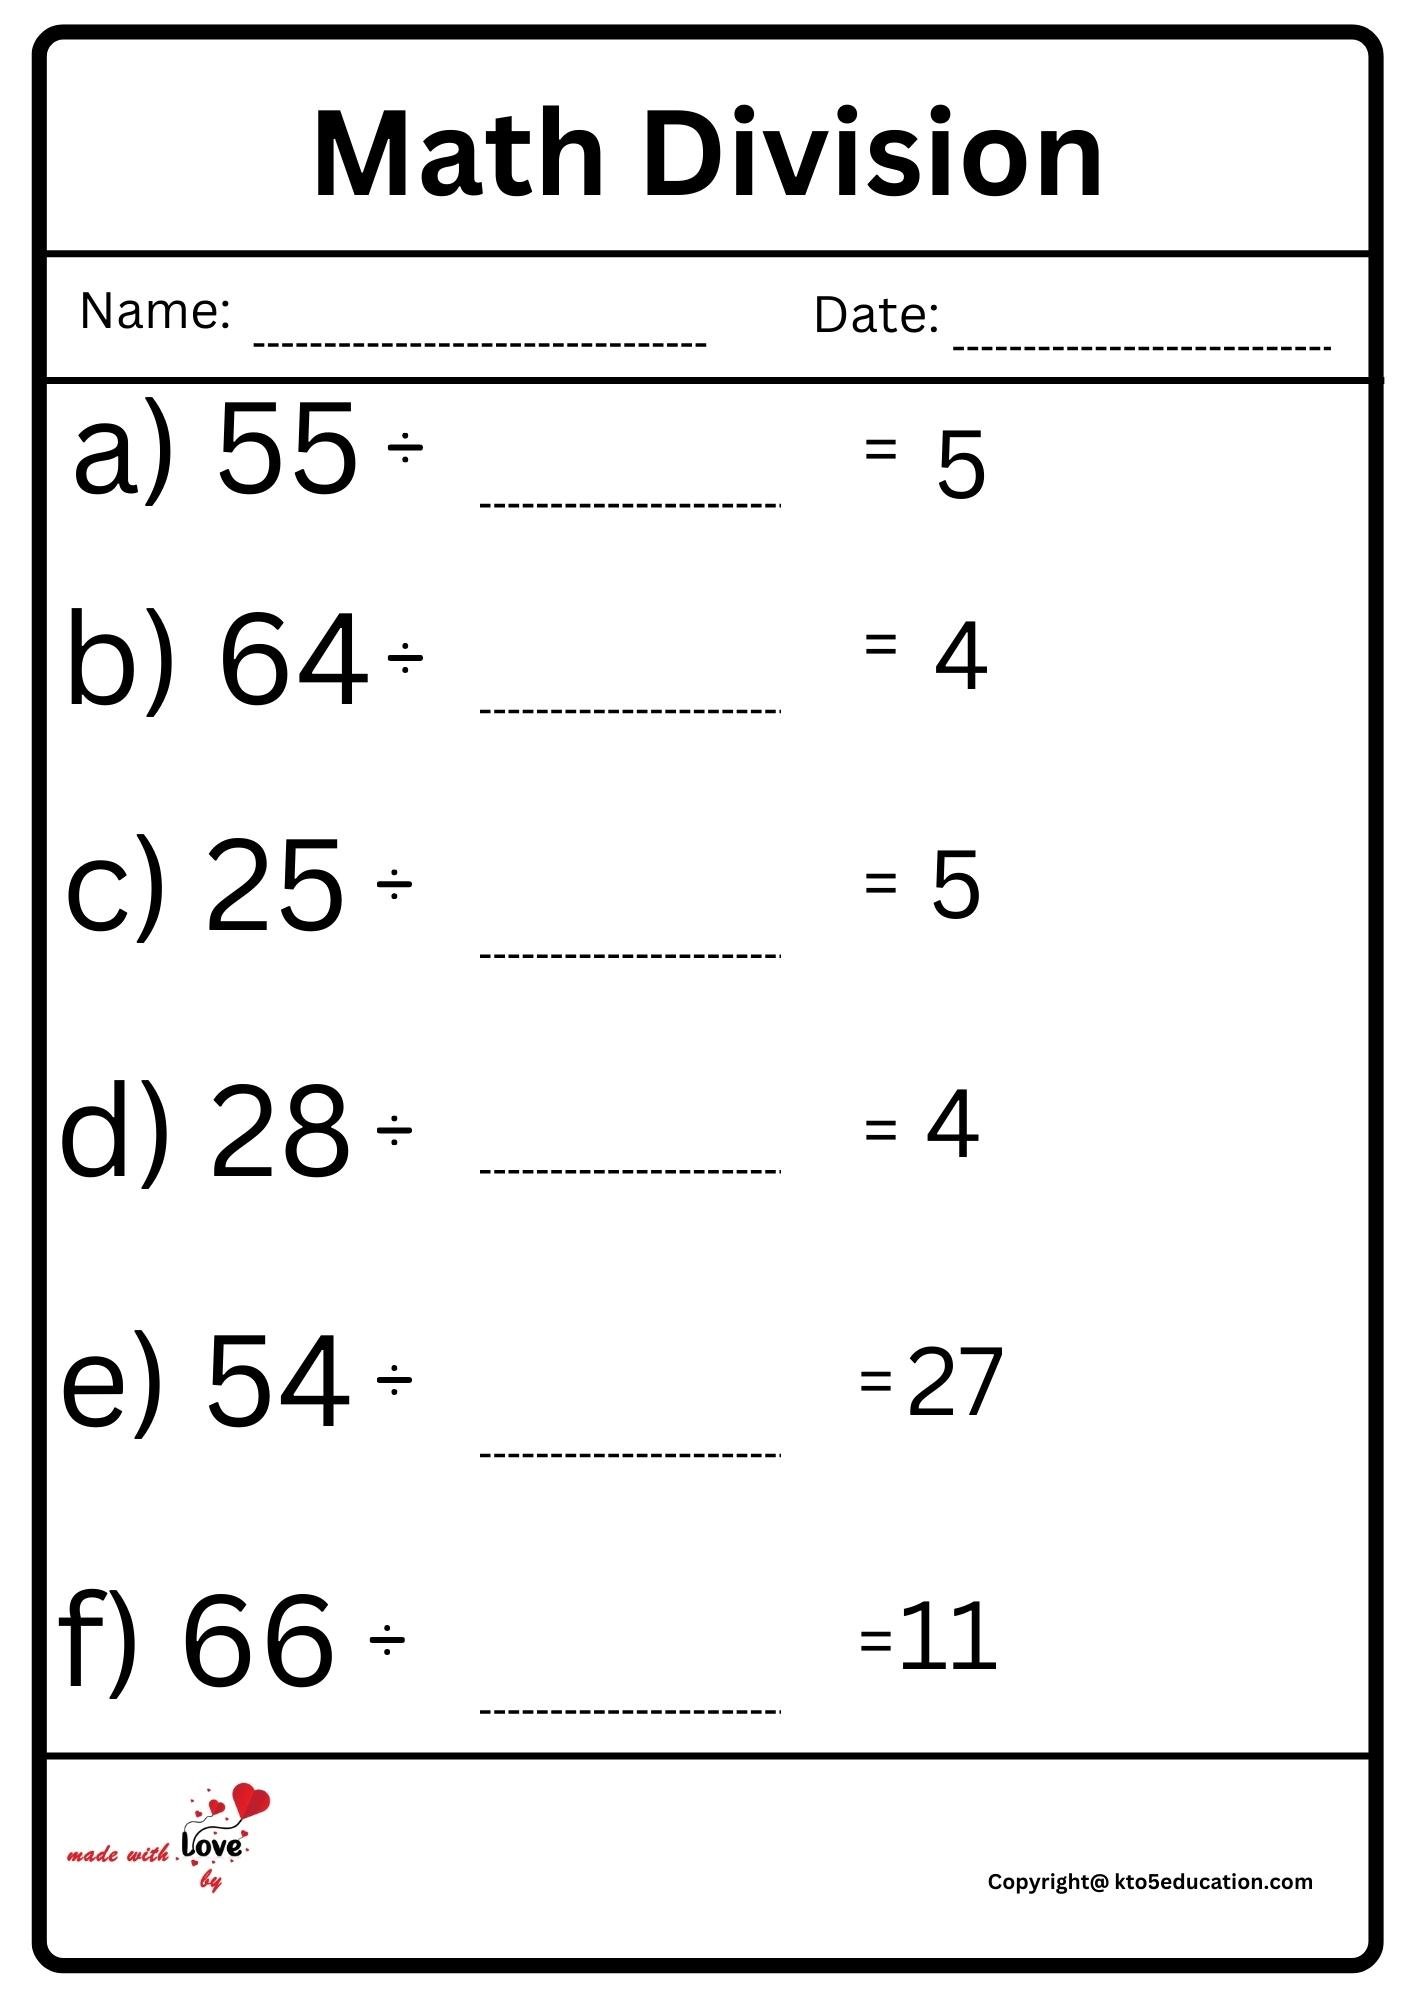 Math Division Worksheet 2